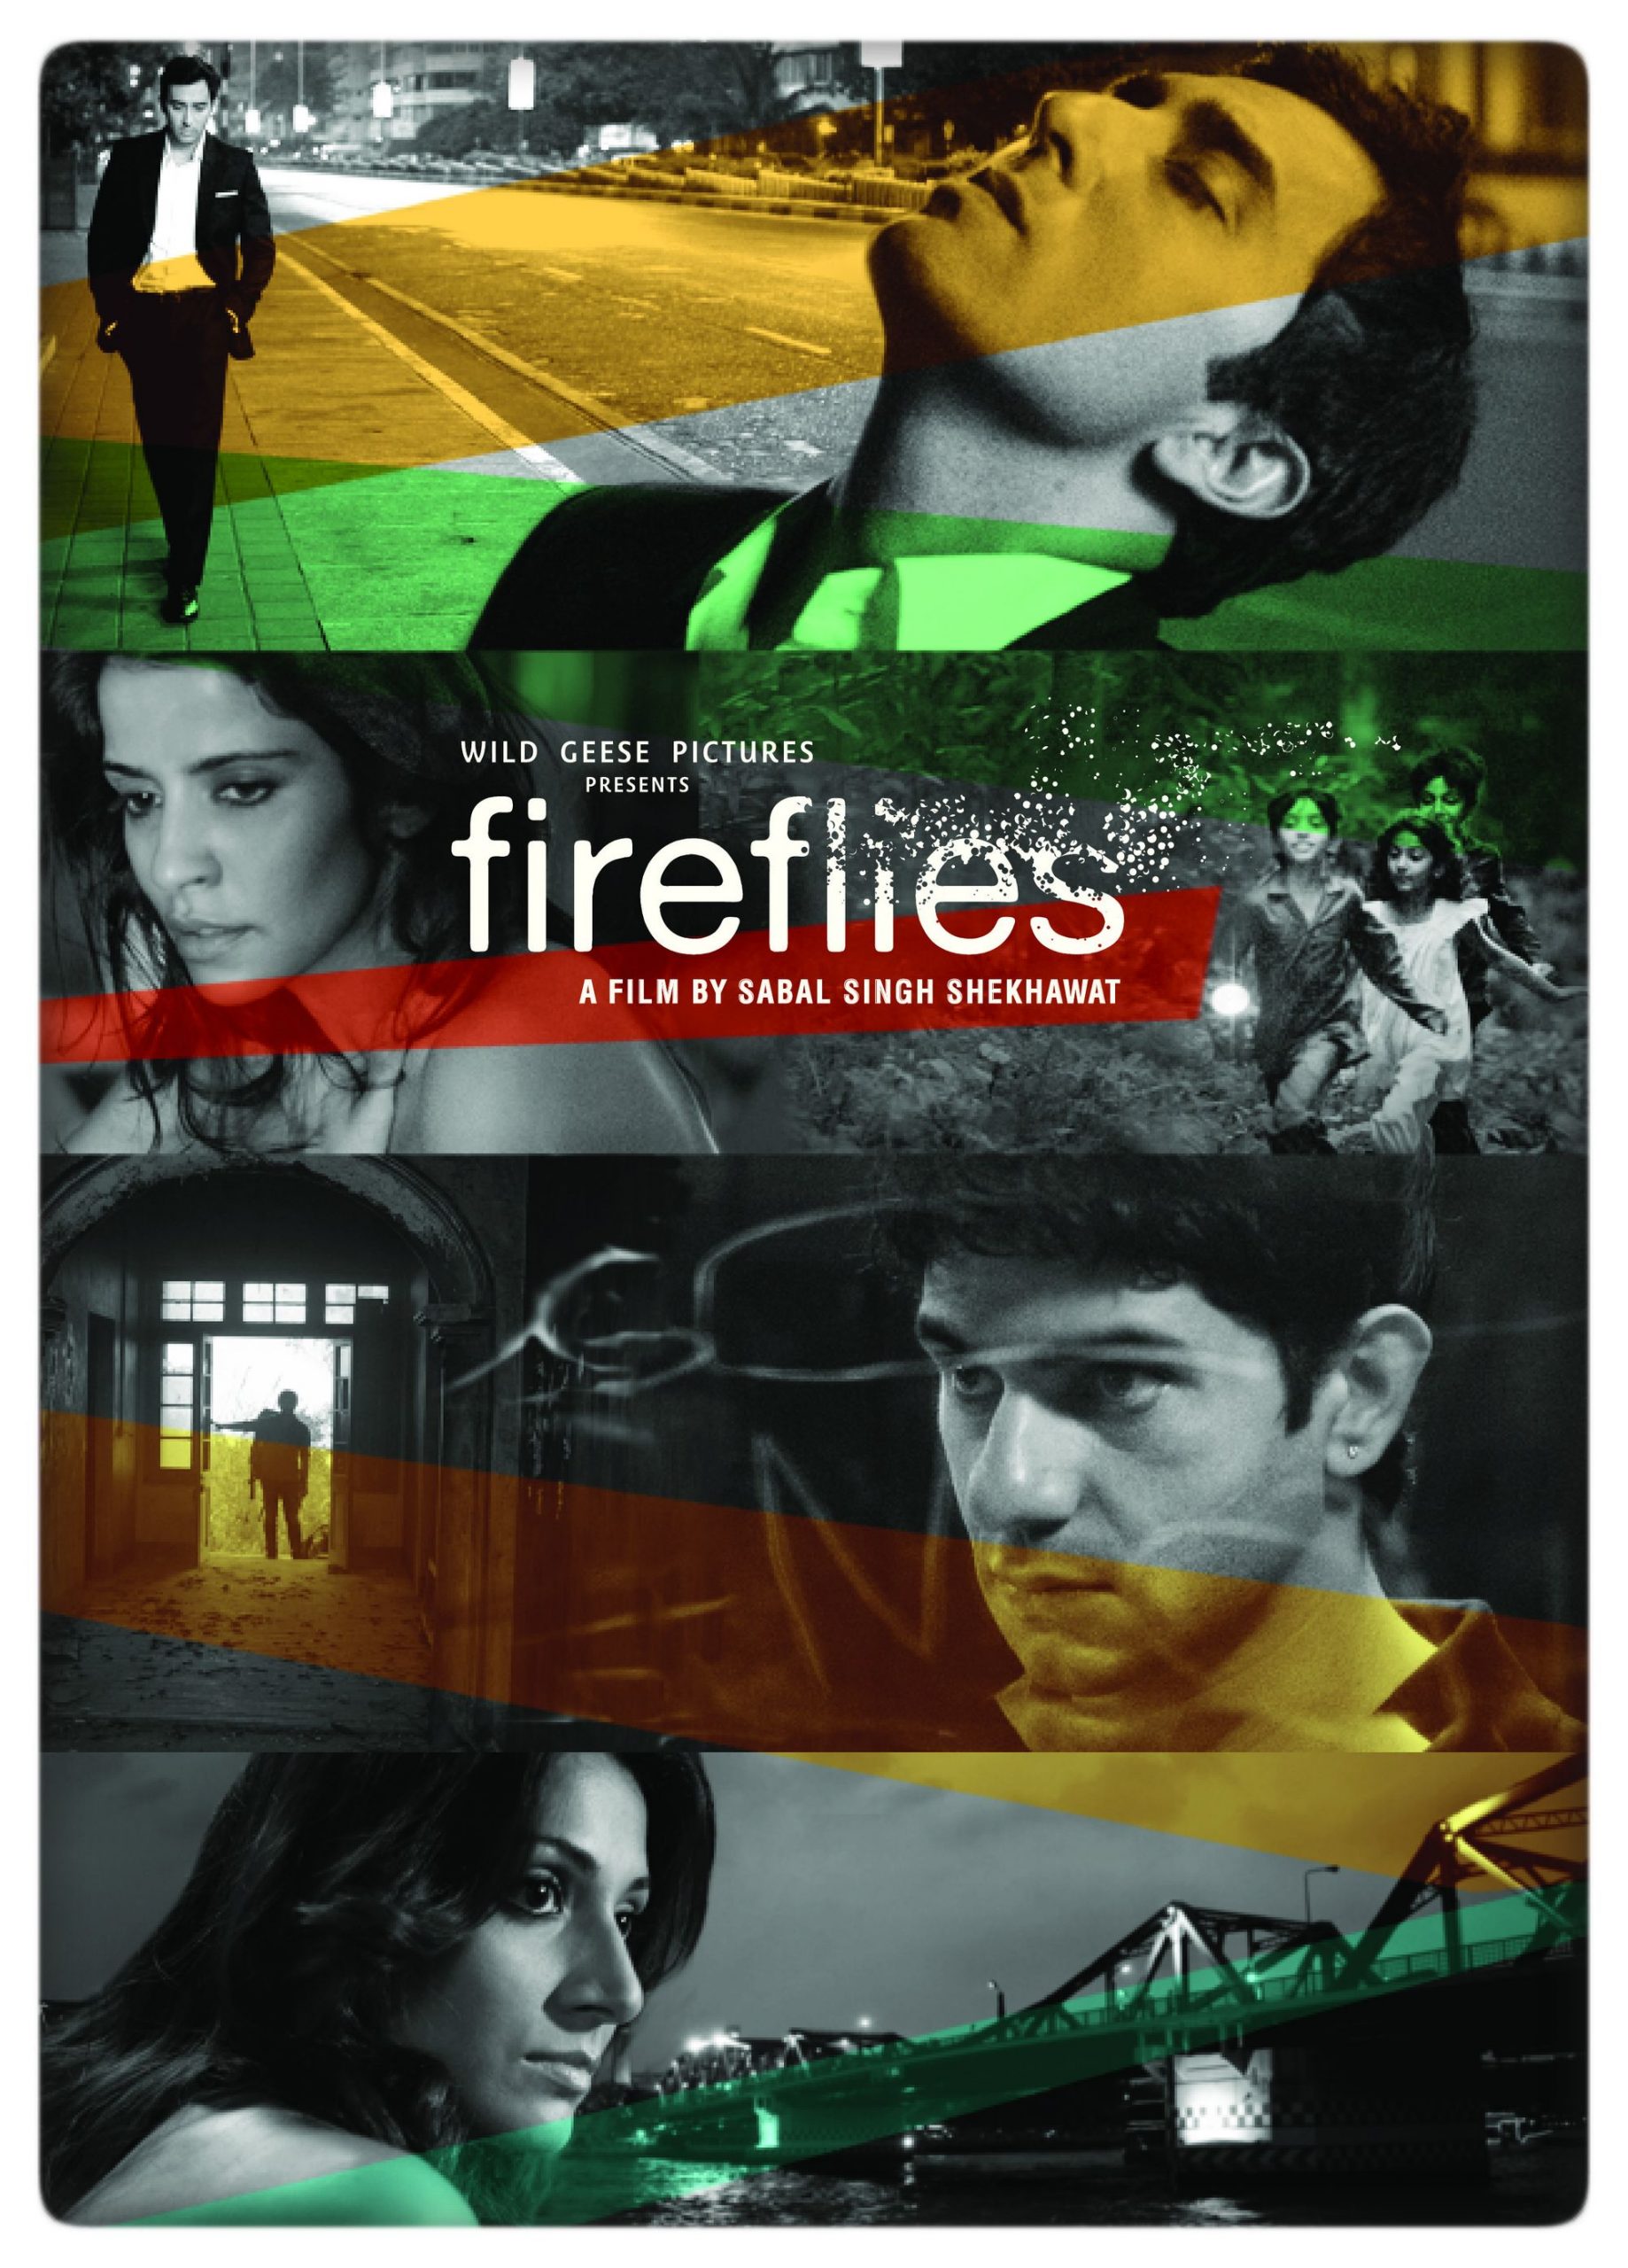 Att’n NYC: Rahul Khanna’s Fireflies Are Coming to You!